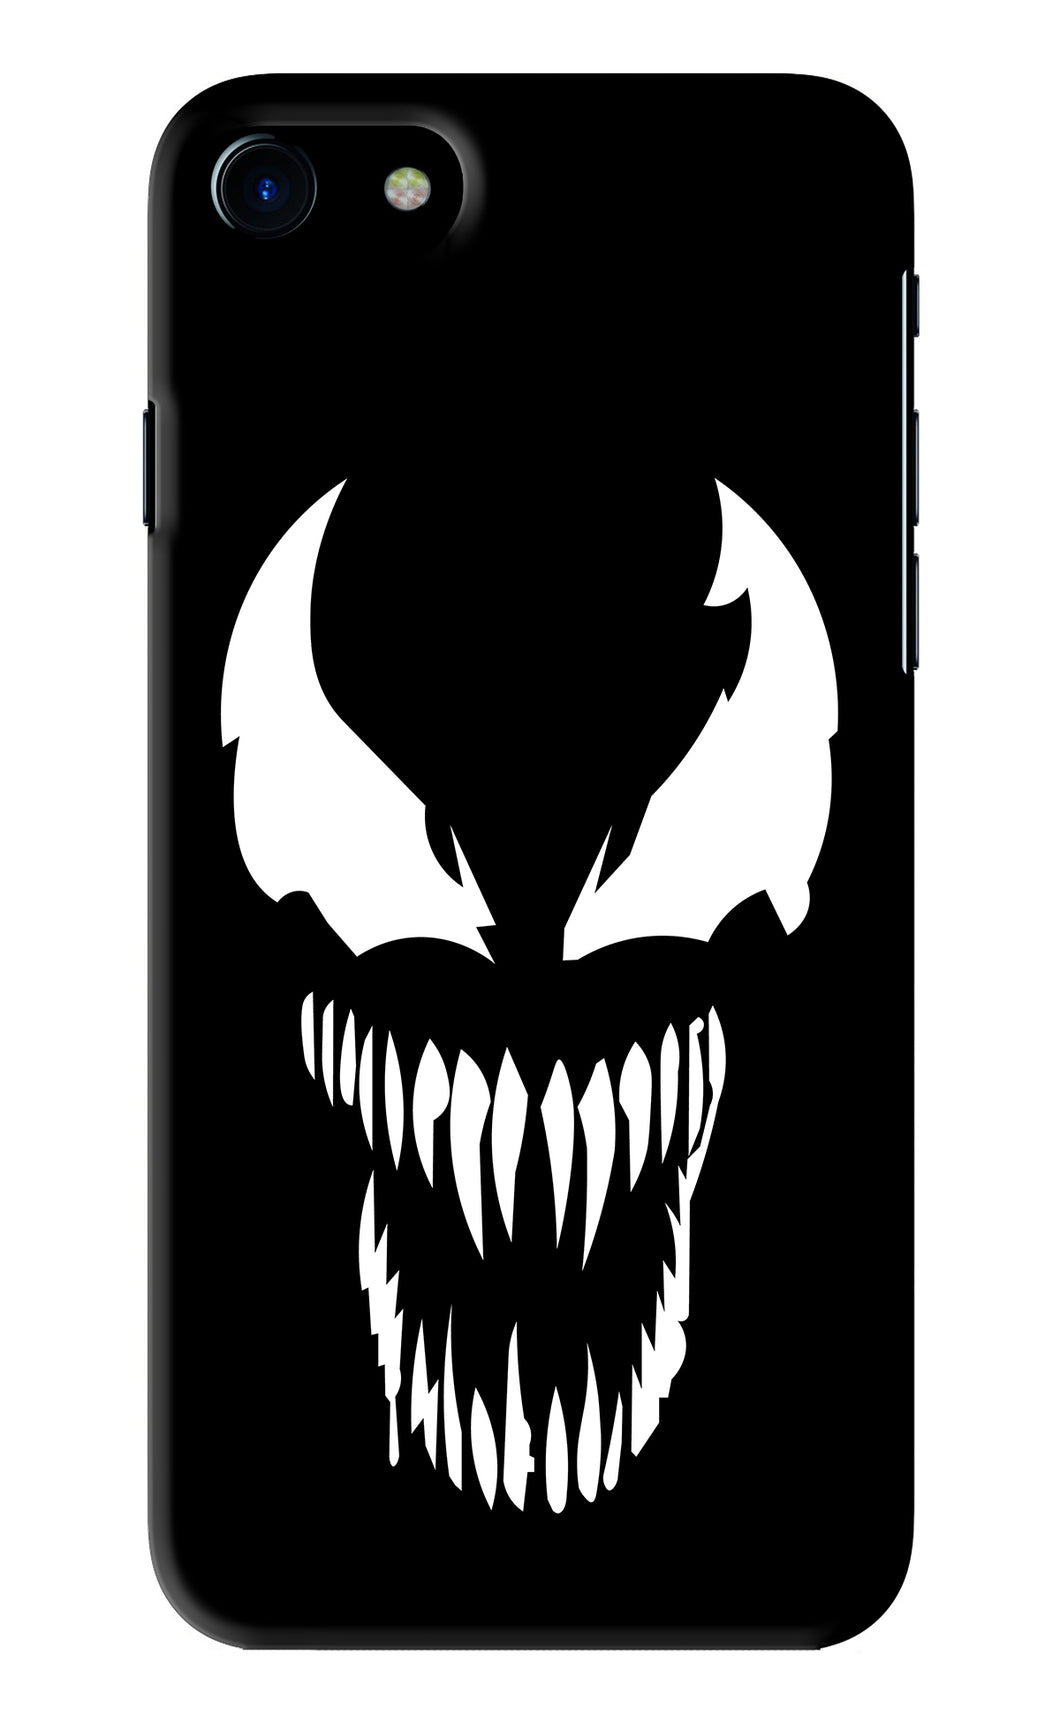 Venom iPhone 7 Back Skin Wrap